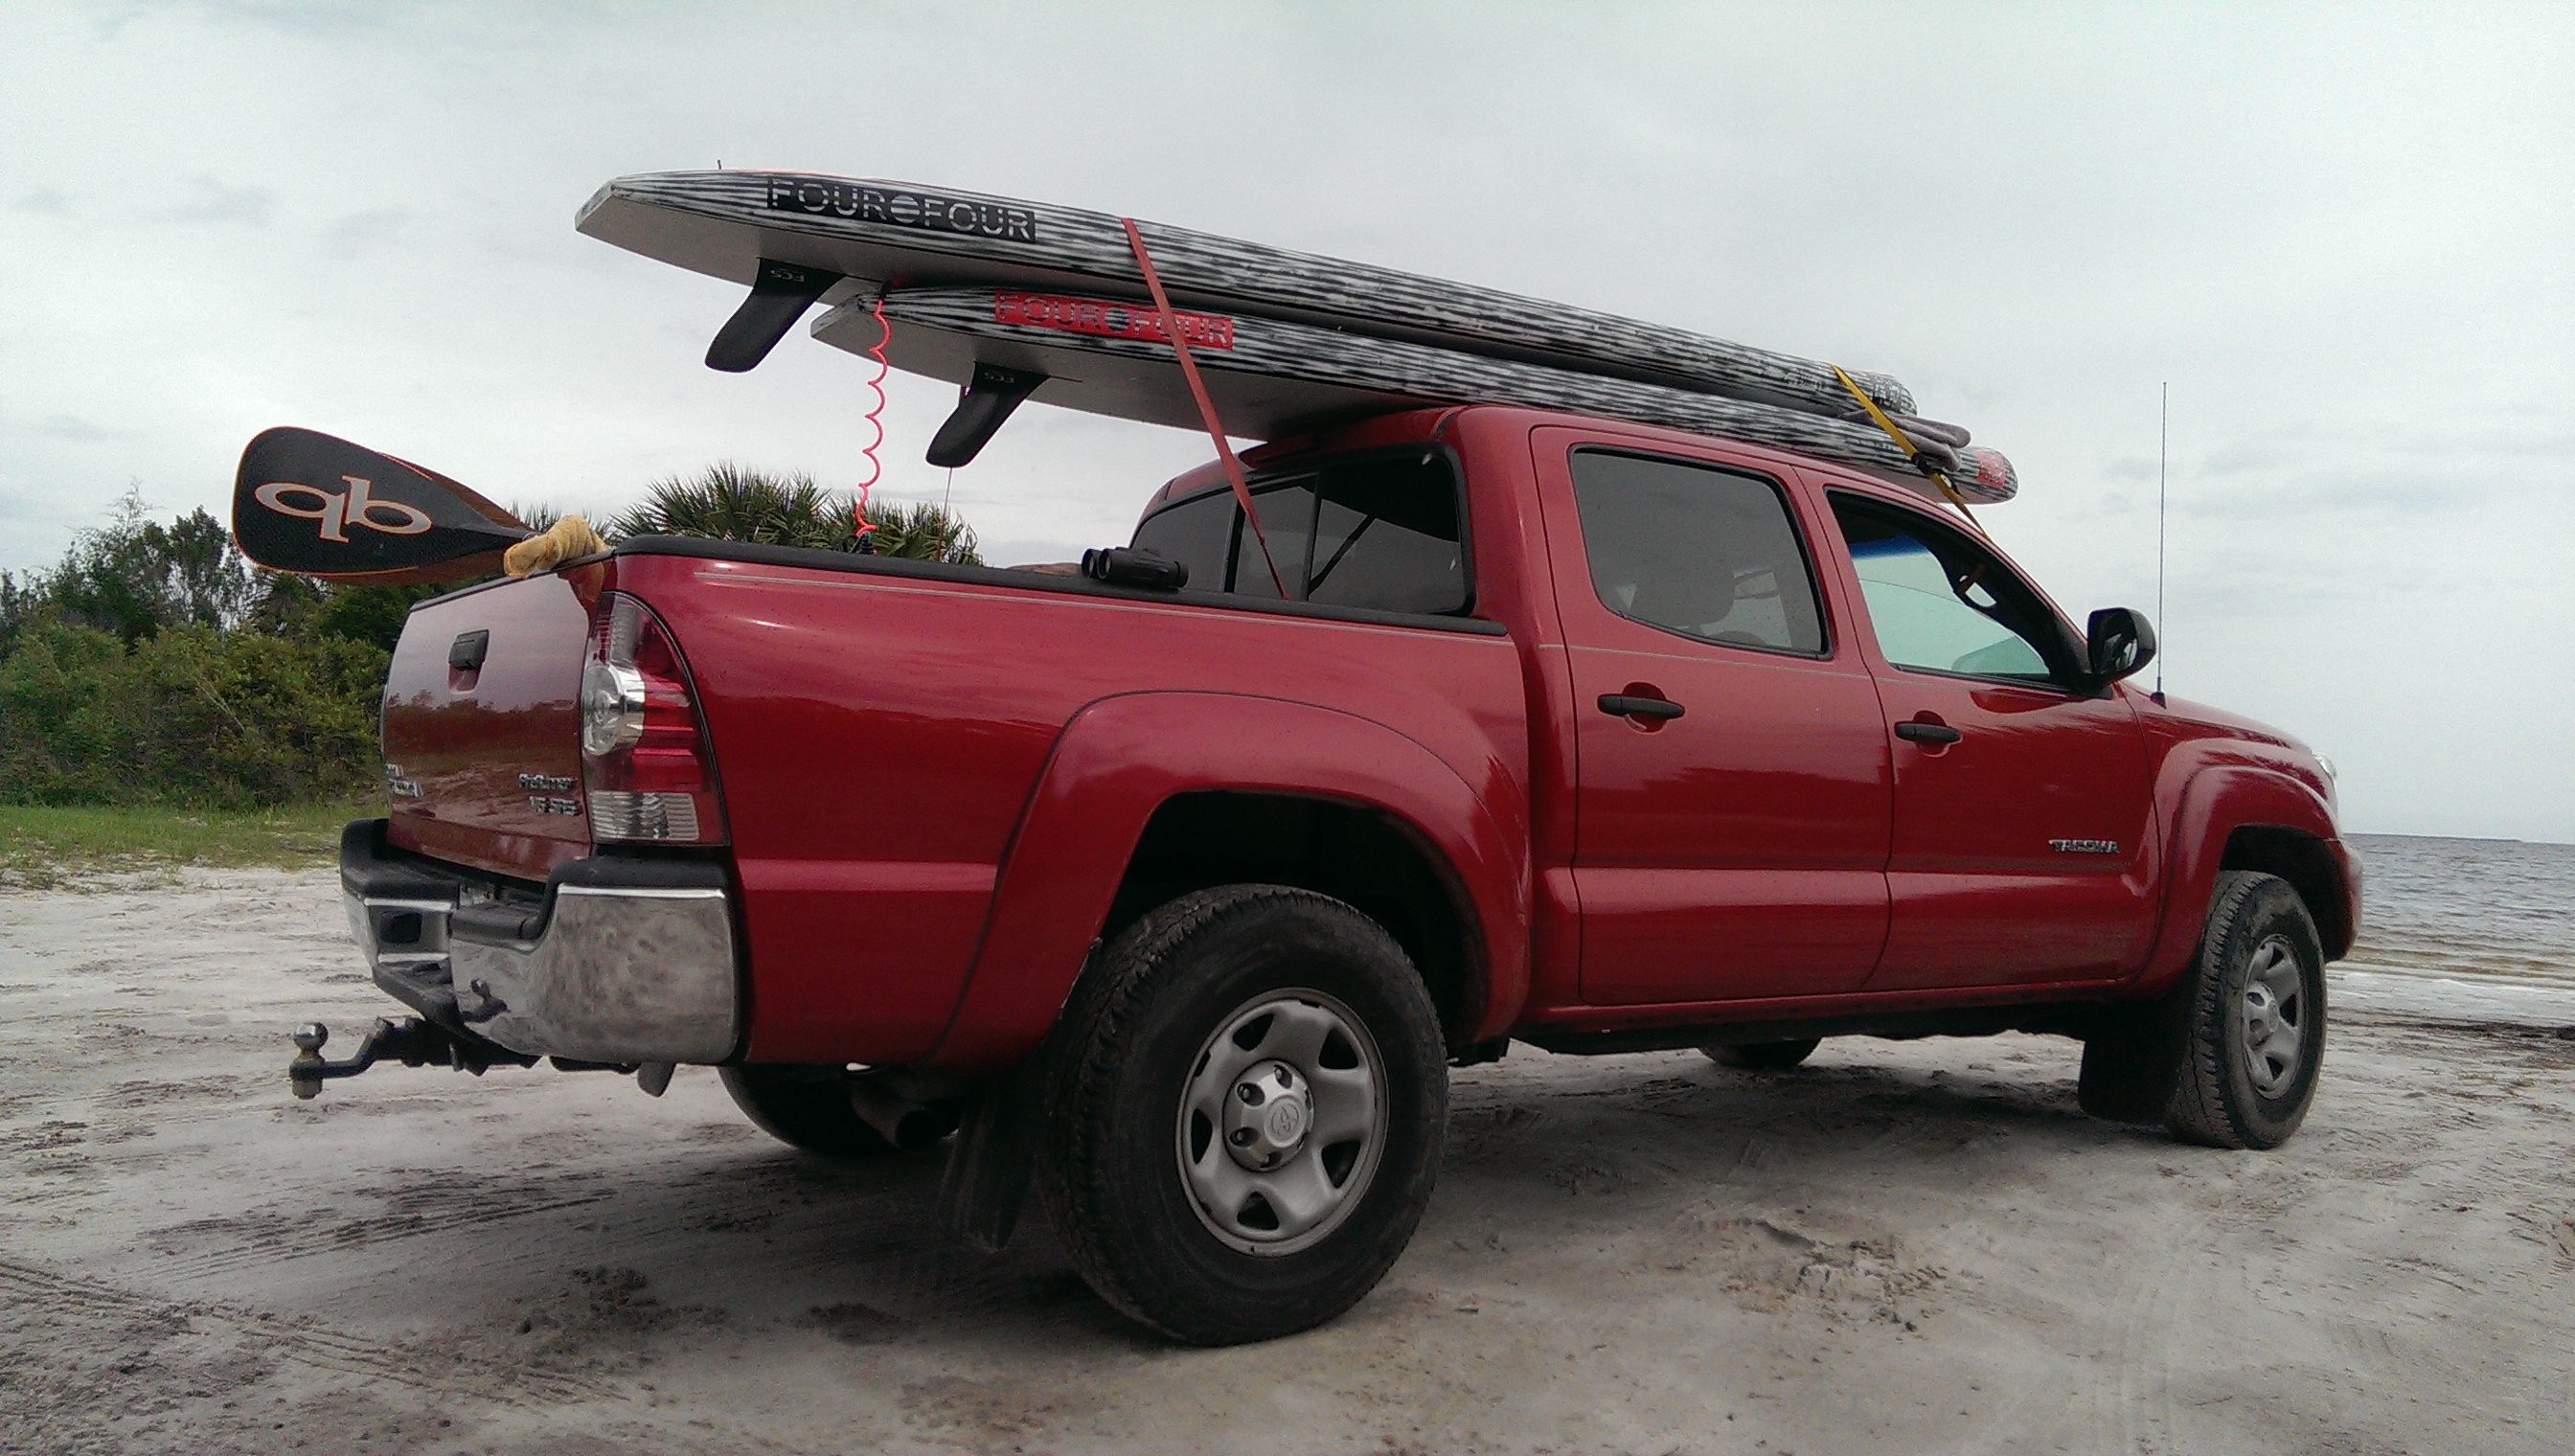 Takoma Truck beach photo with 404 SUPs